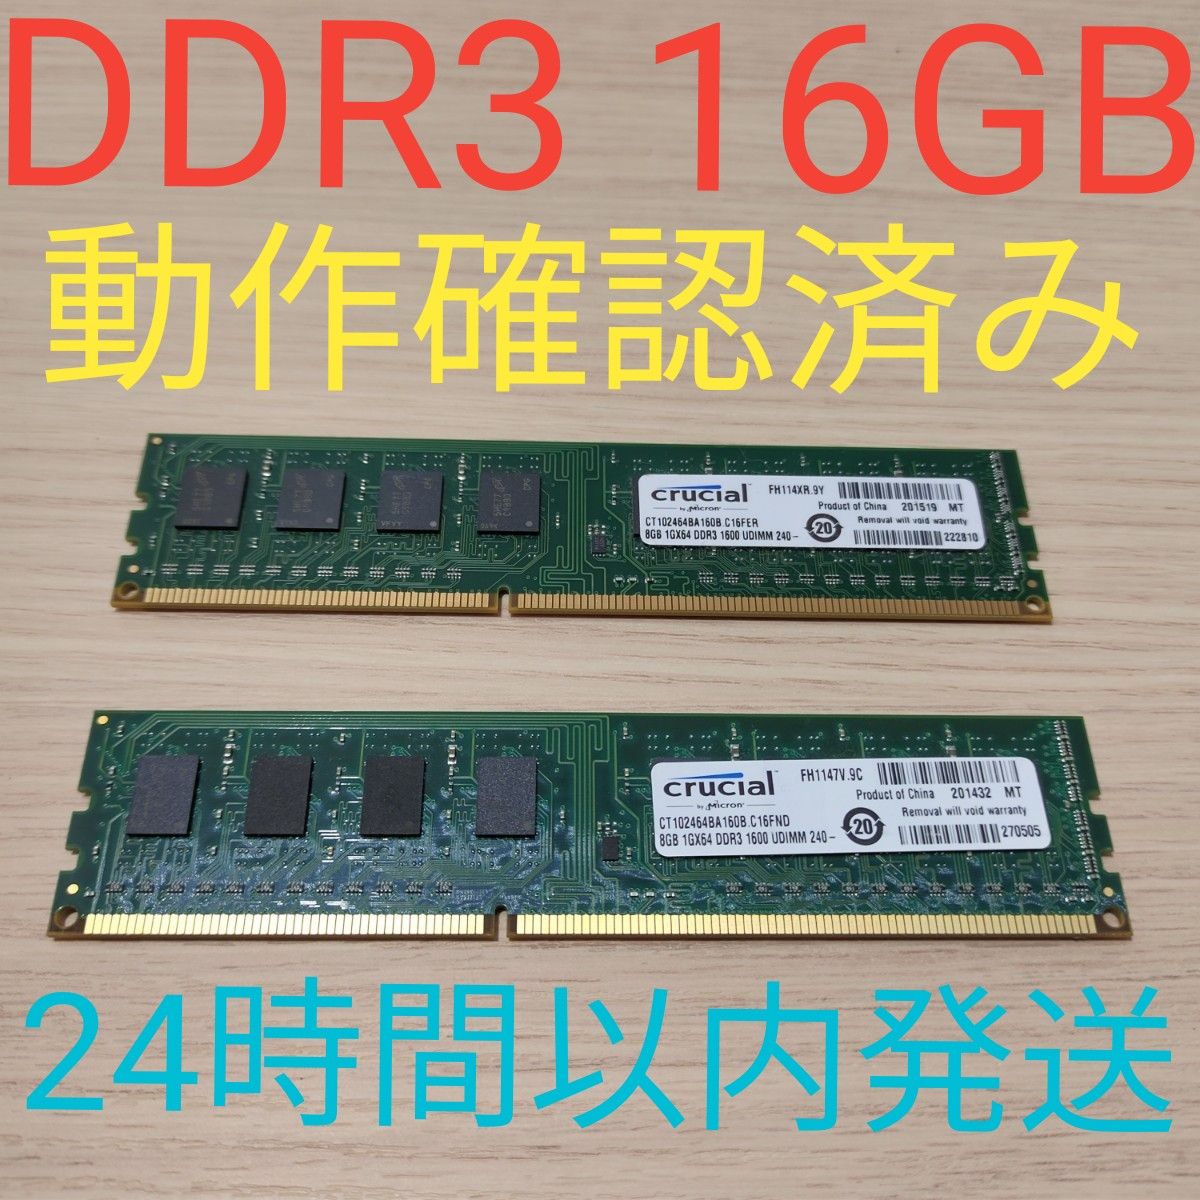 DDR3 1600 8GB×2 16GB 動作確認済み　PC3 12800 24時間以内発送 Crucial